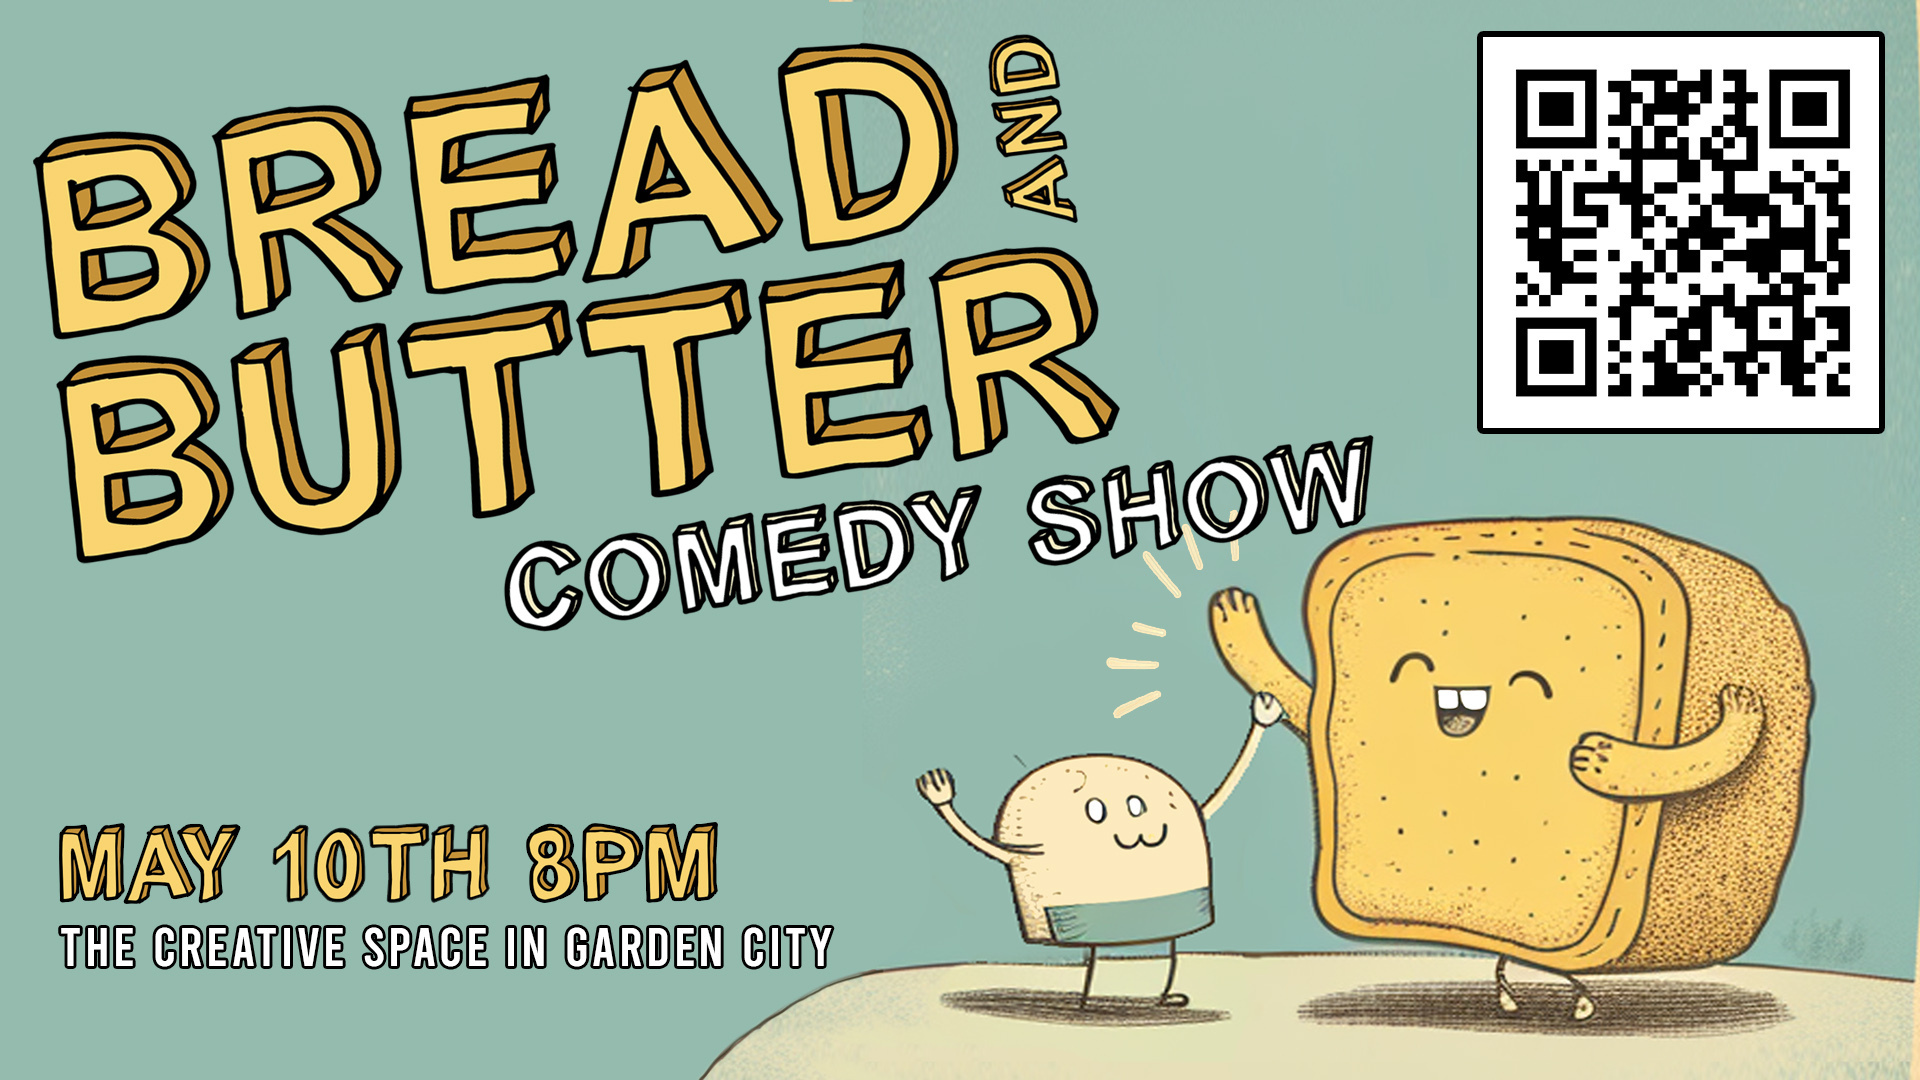 Bread + Butter Improv Comedy Show, Garden City, Idaho, United States